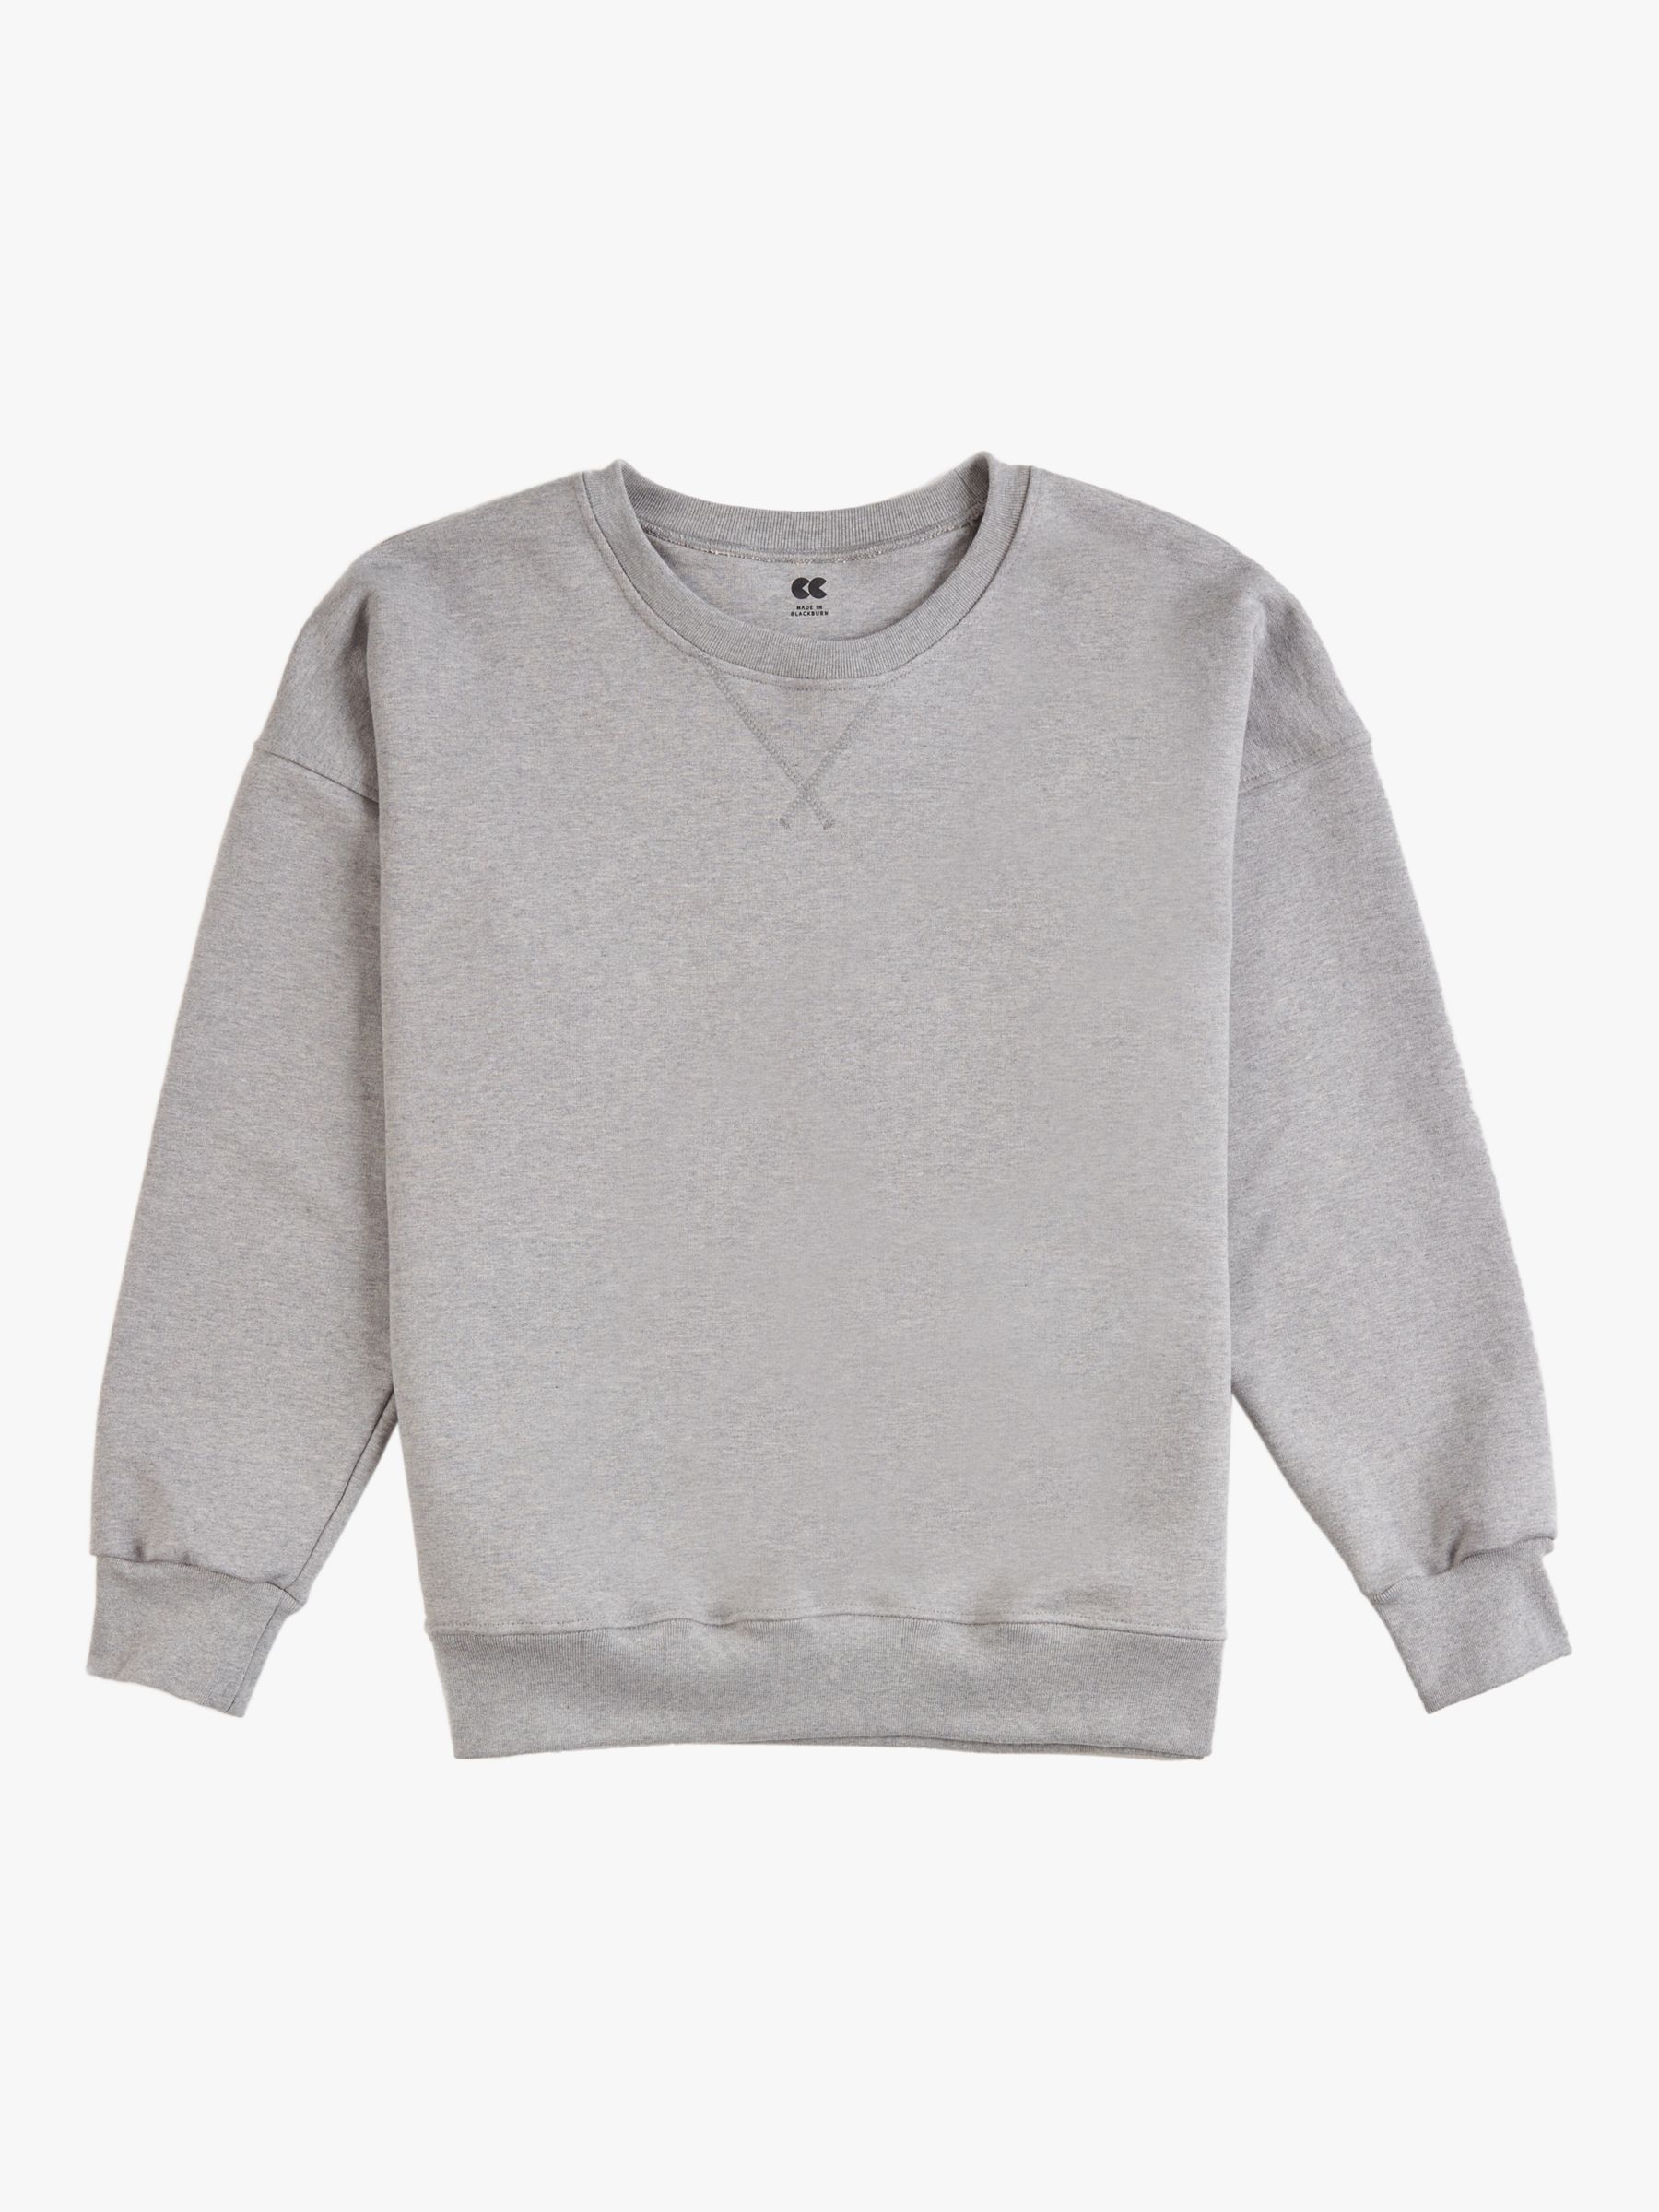 Buy Community Clothing Cotton Crew Drop Shoulder Sweatshirt Online at johnlewis.com